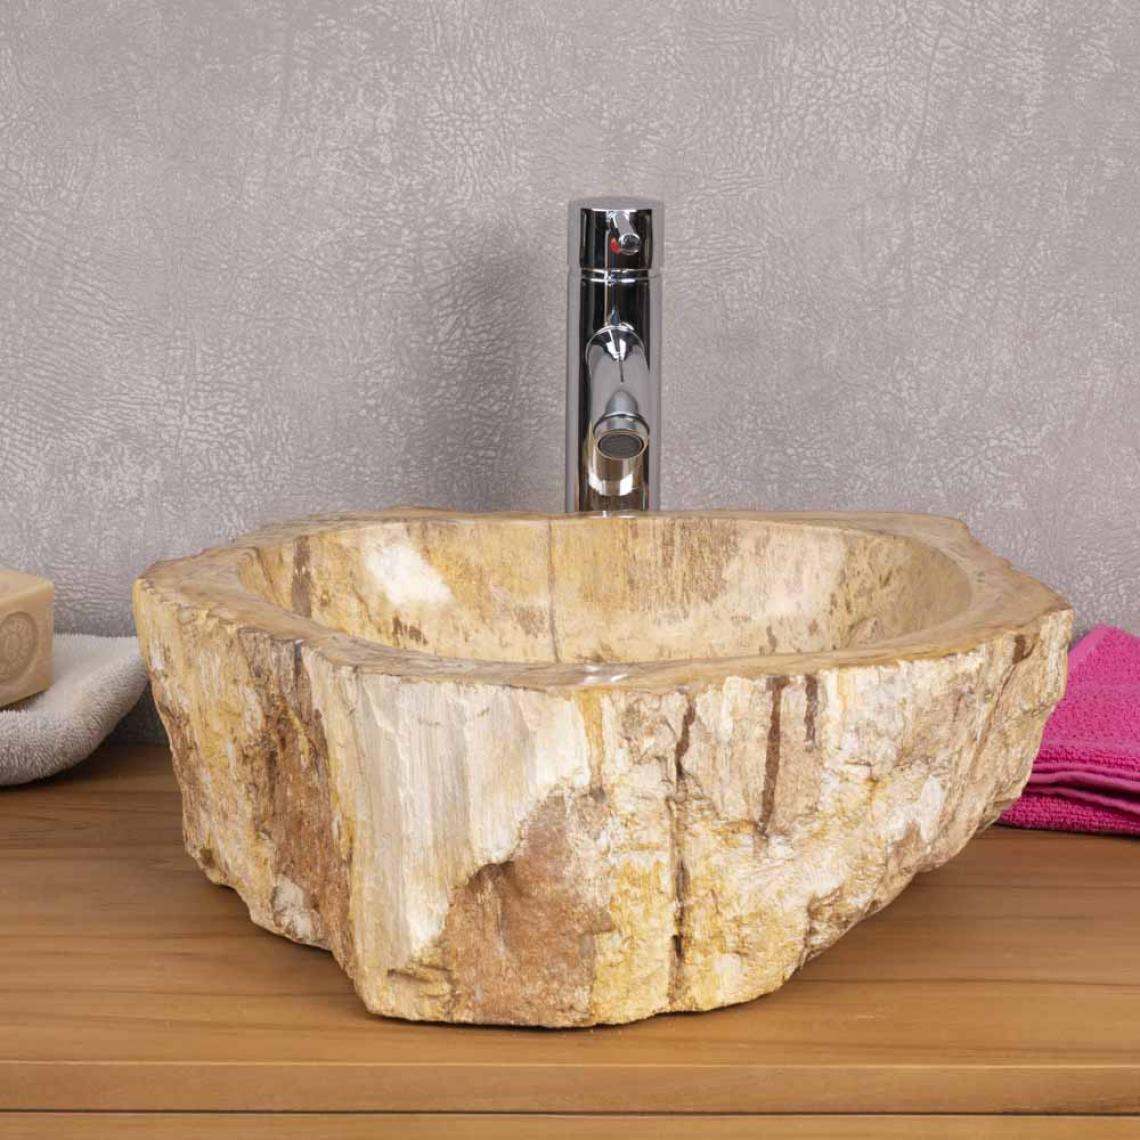 Wanda Collection - Grande vasque salle de bain en bois pétrifié fossilisé marron - Vasque